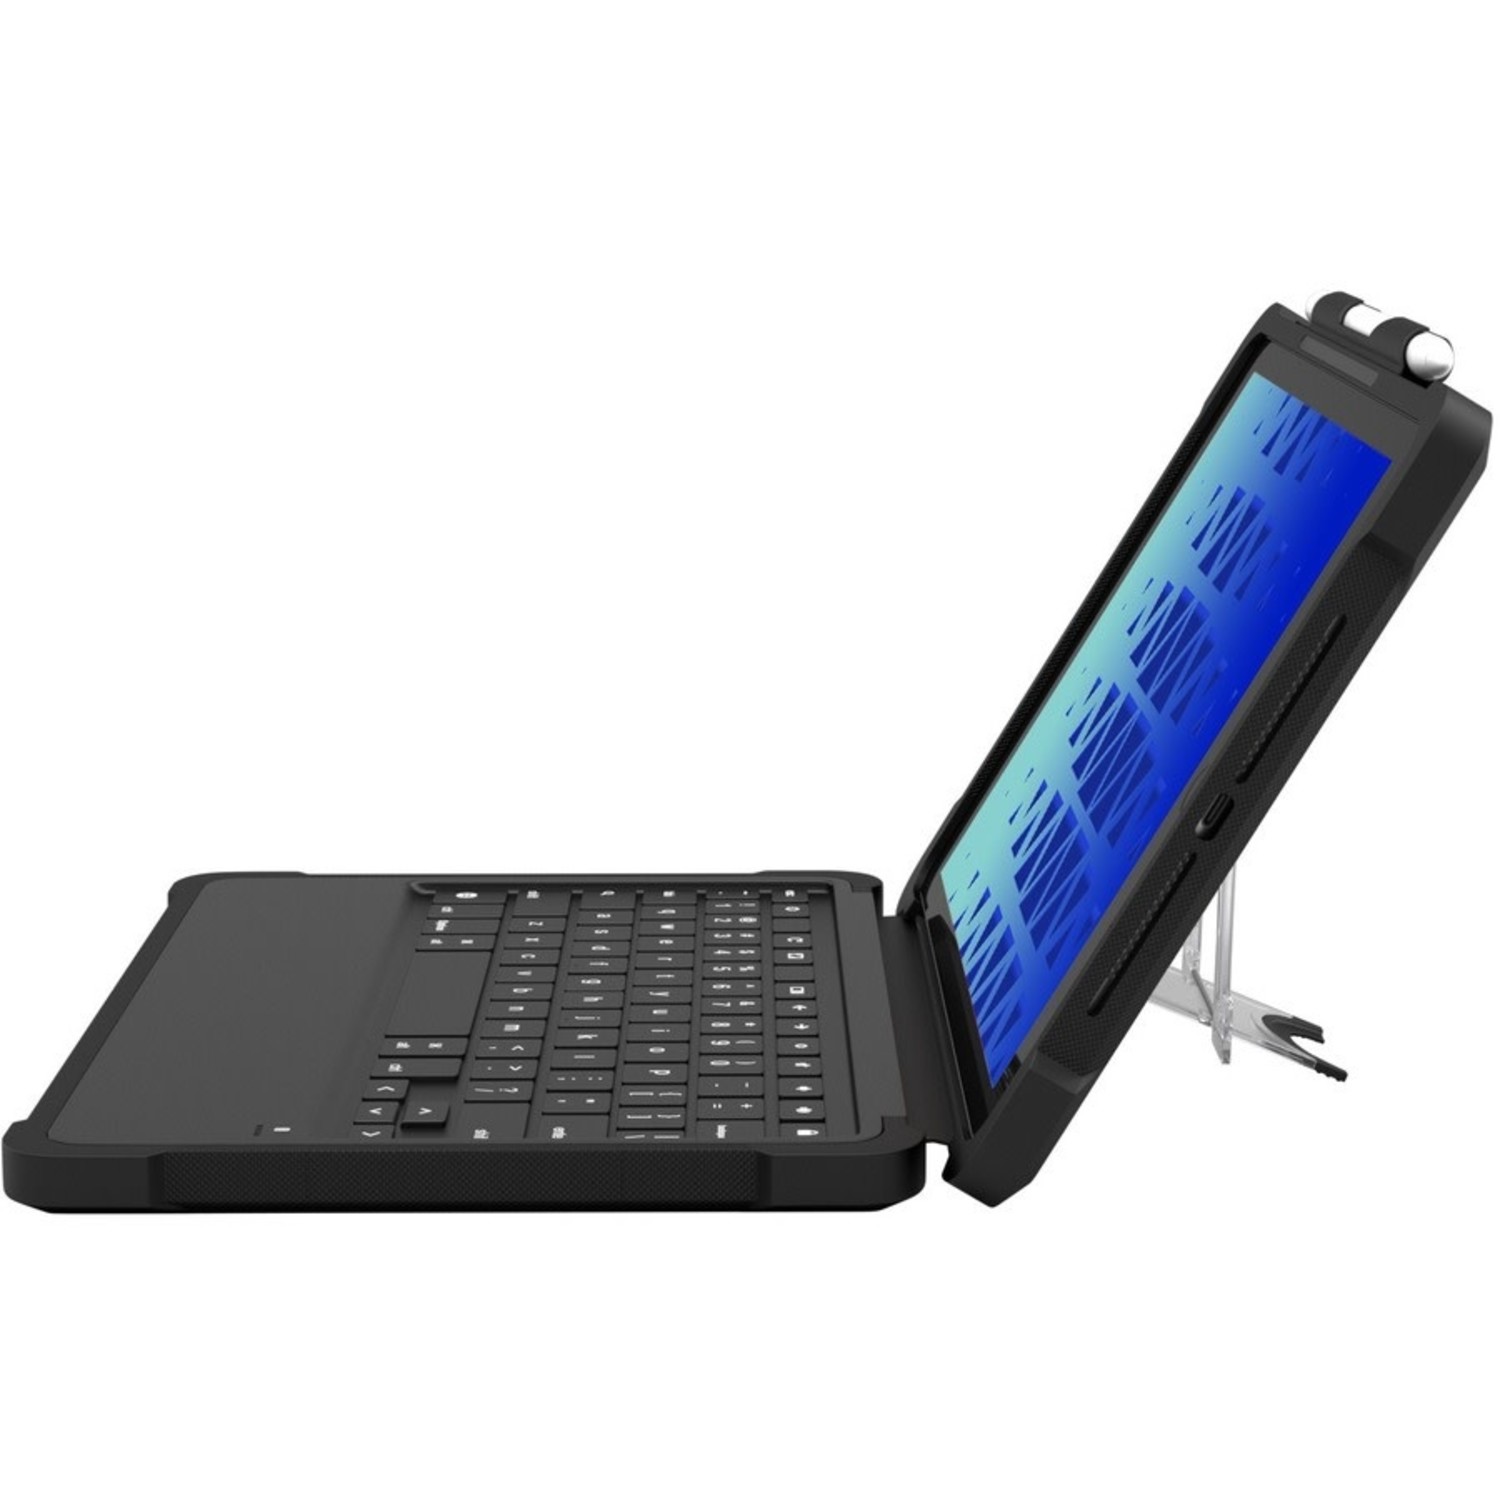 Ipad Cases Keyboard 7th Generation